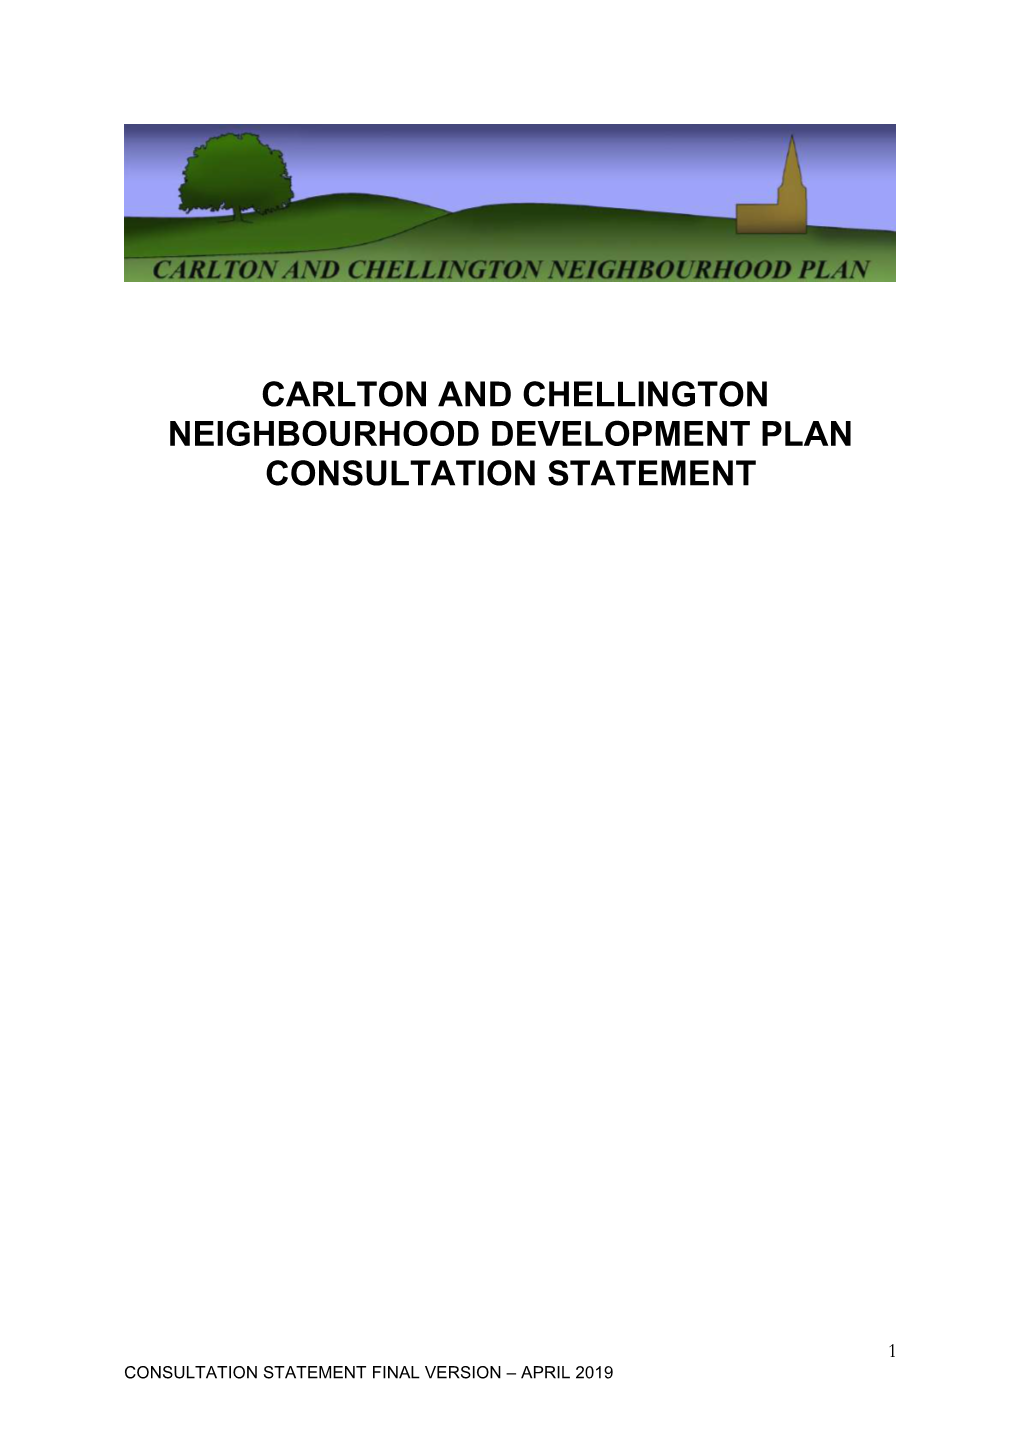 Carlton and Chellington Neighbourhood Development Plan Consultation Statement